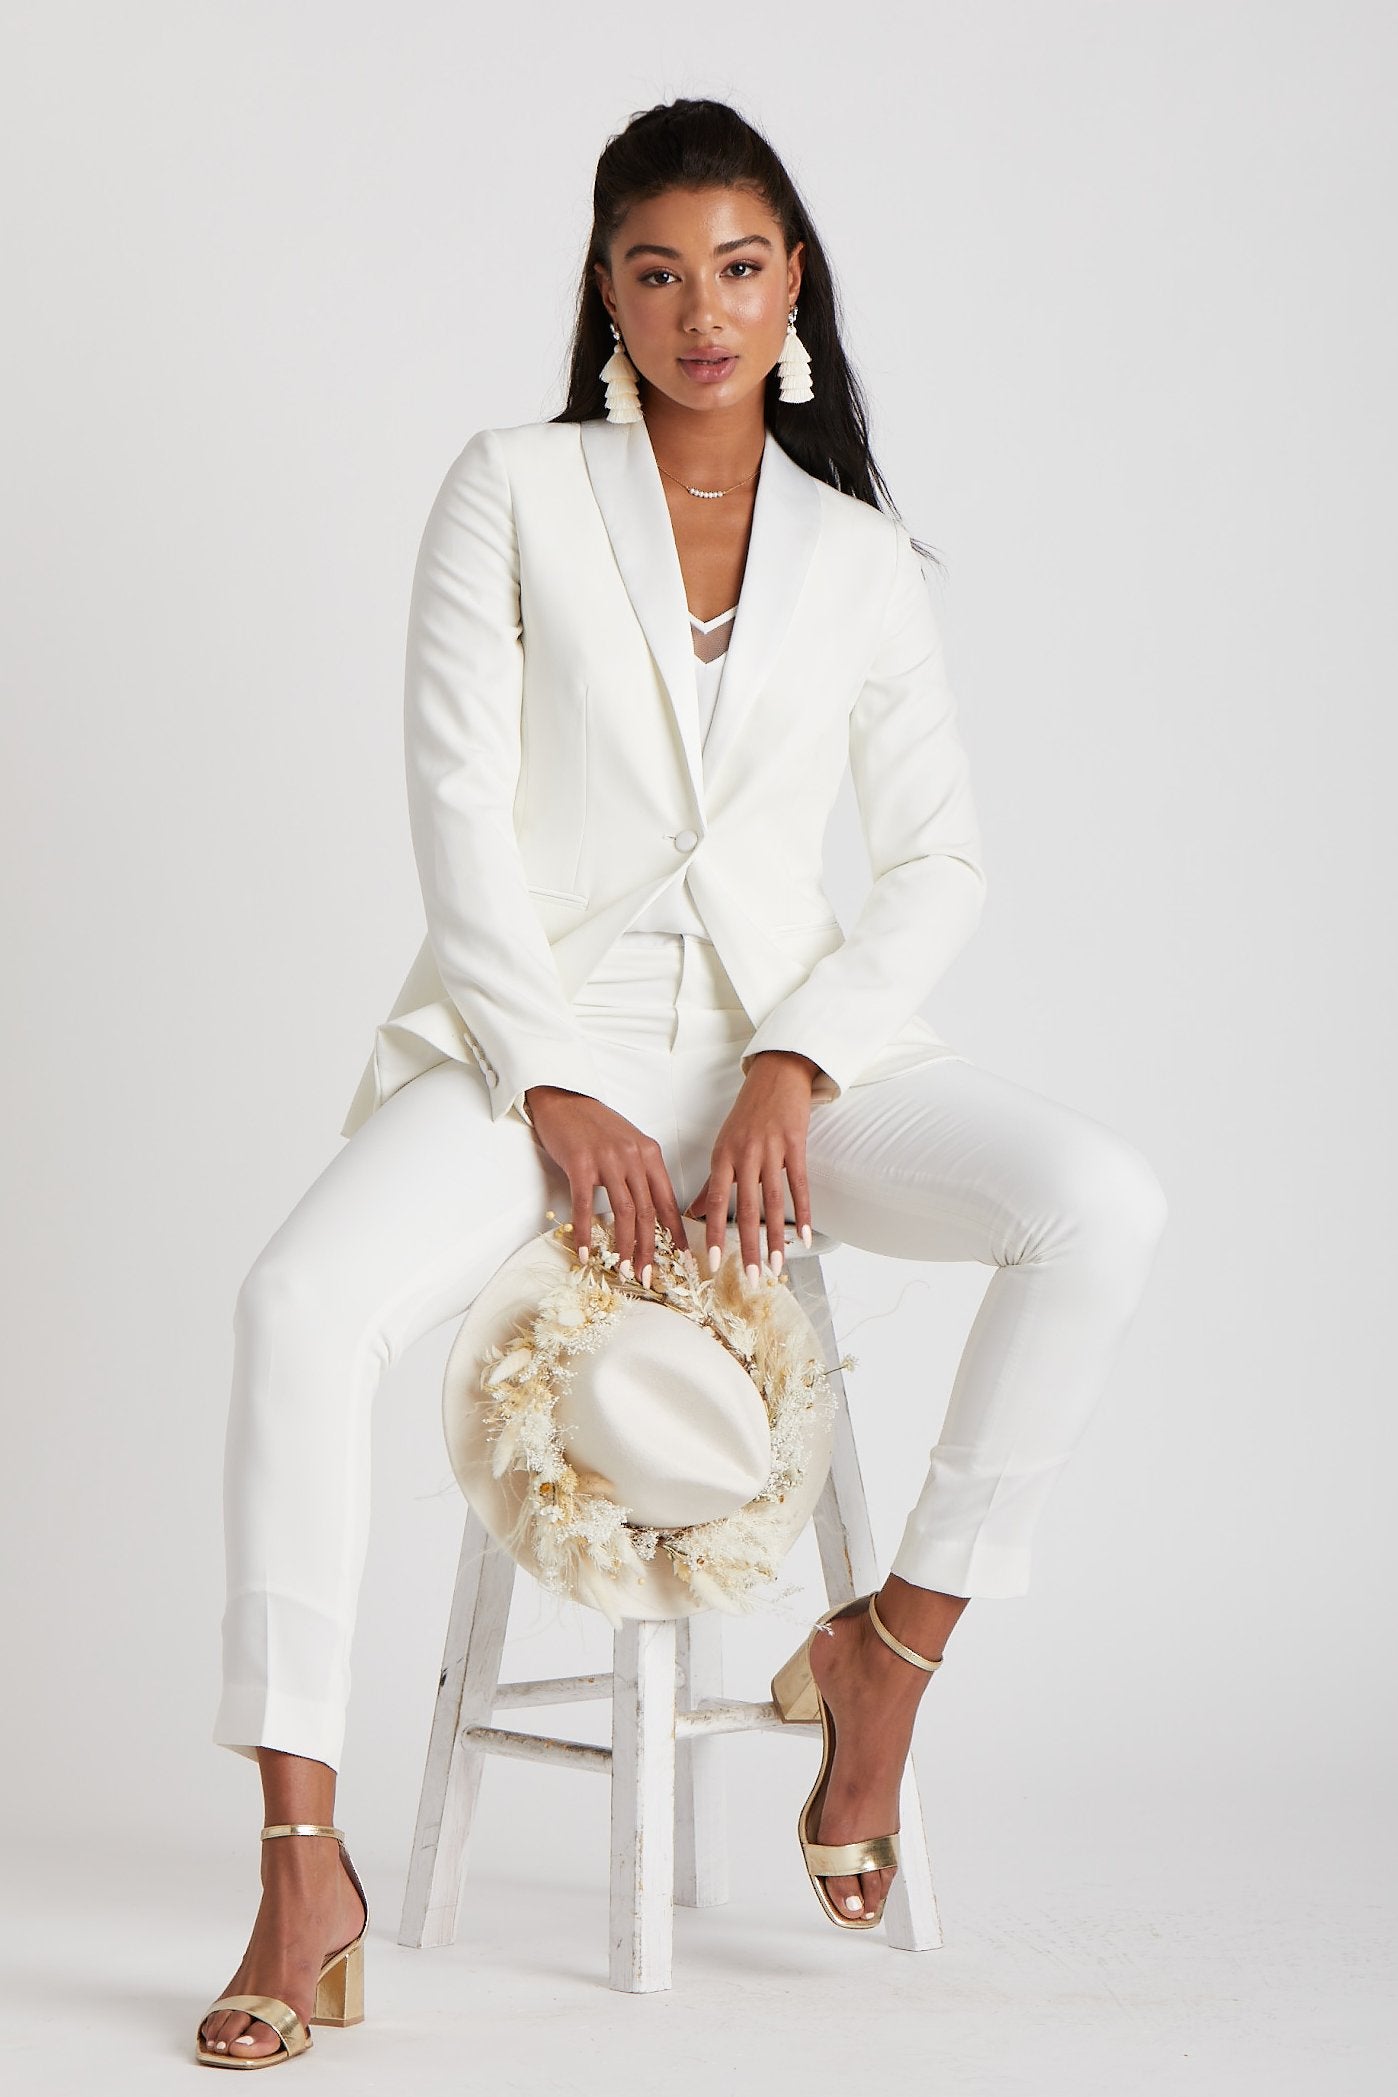 Women's White Tuxedo Jacket by SuitShop